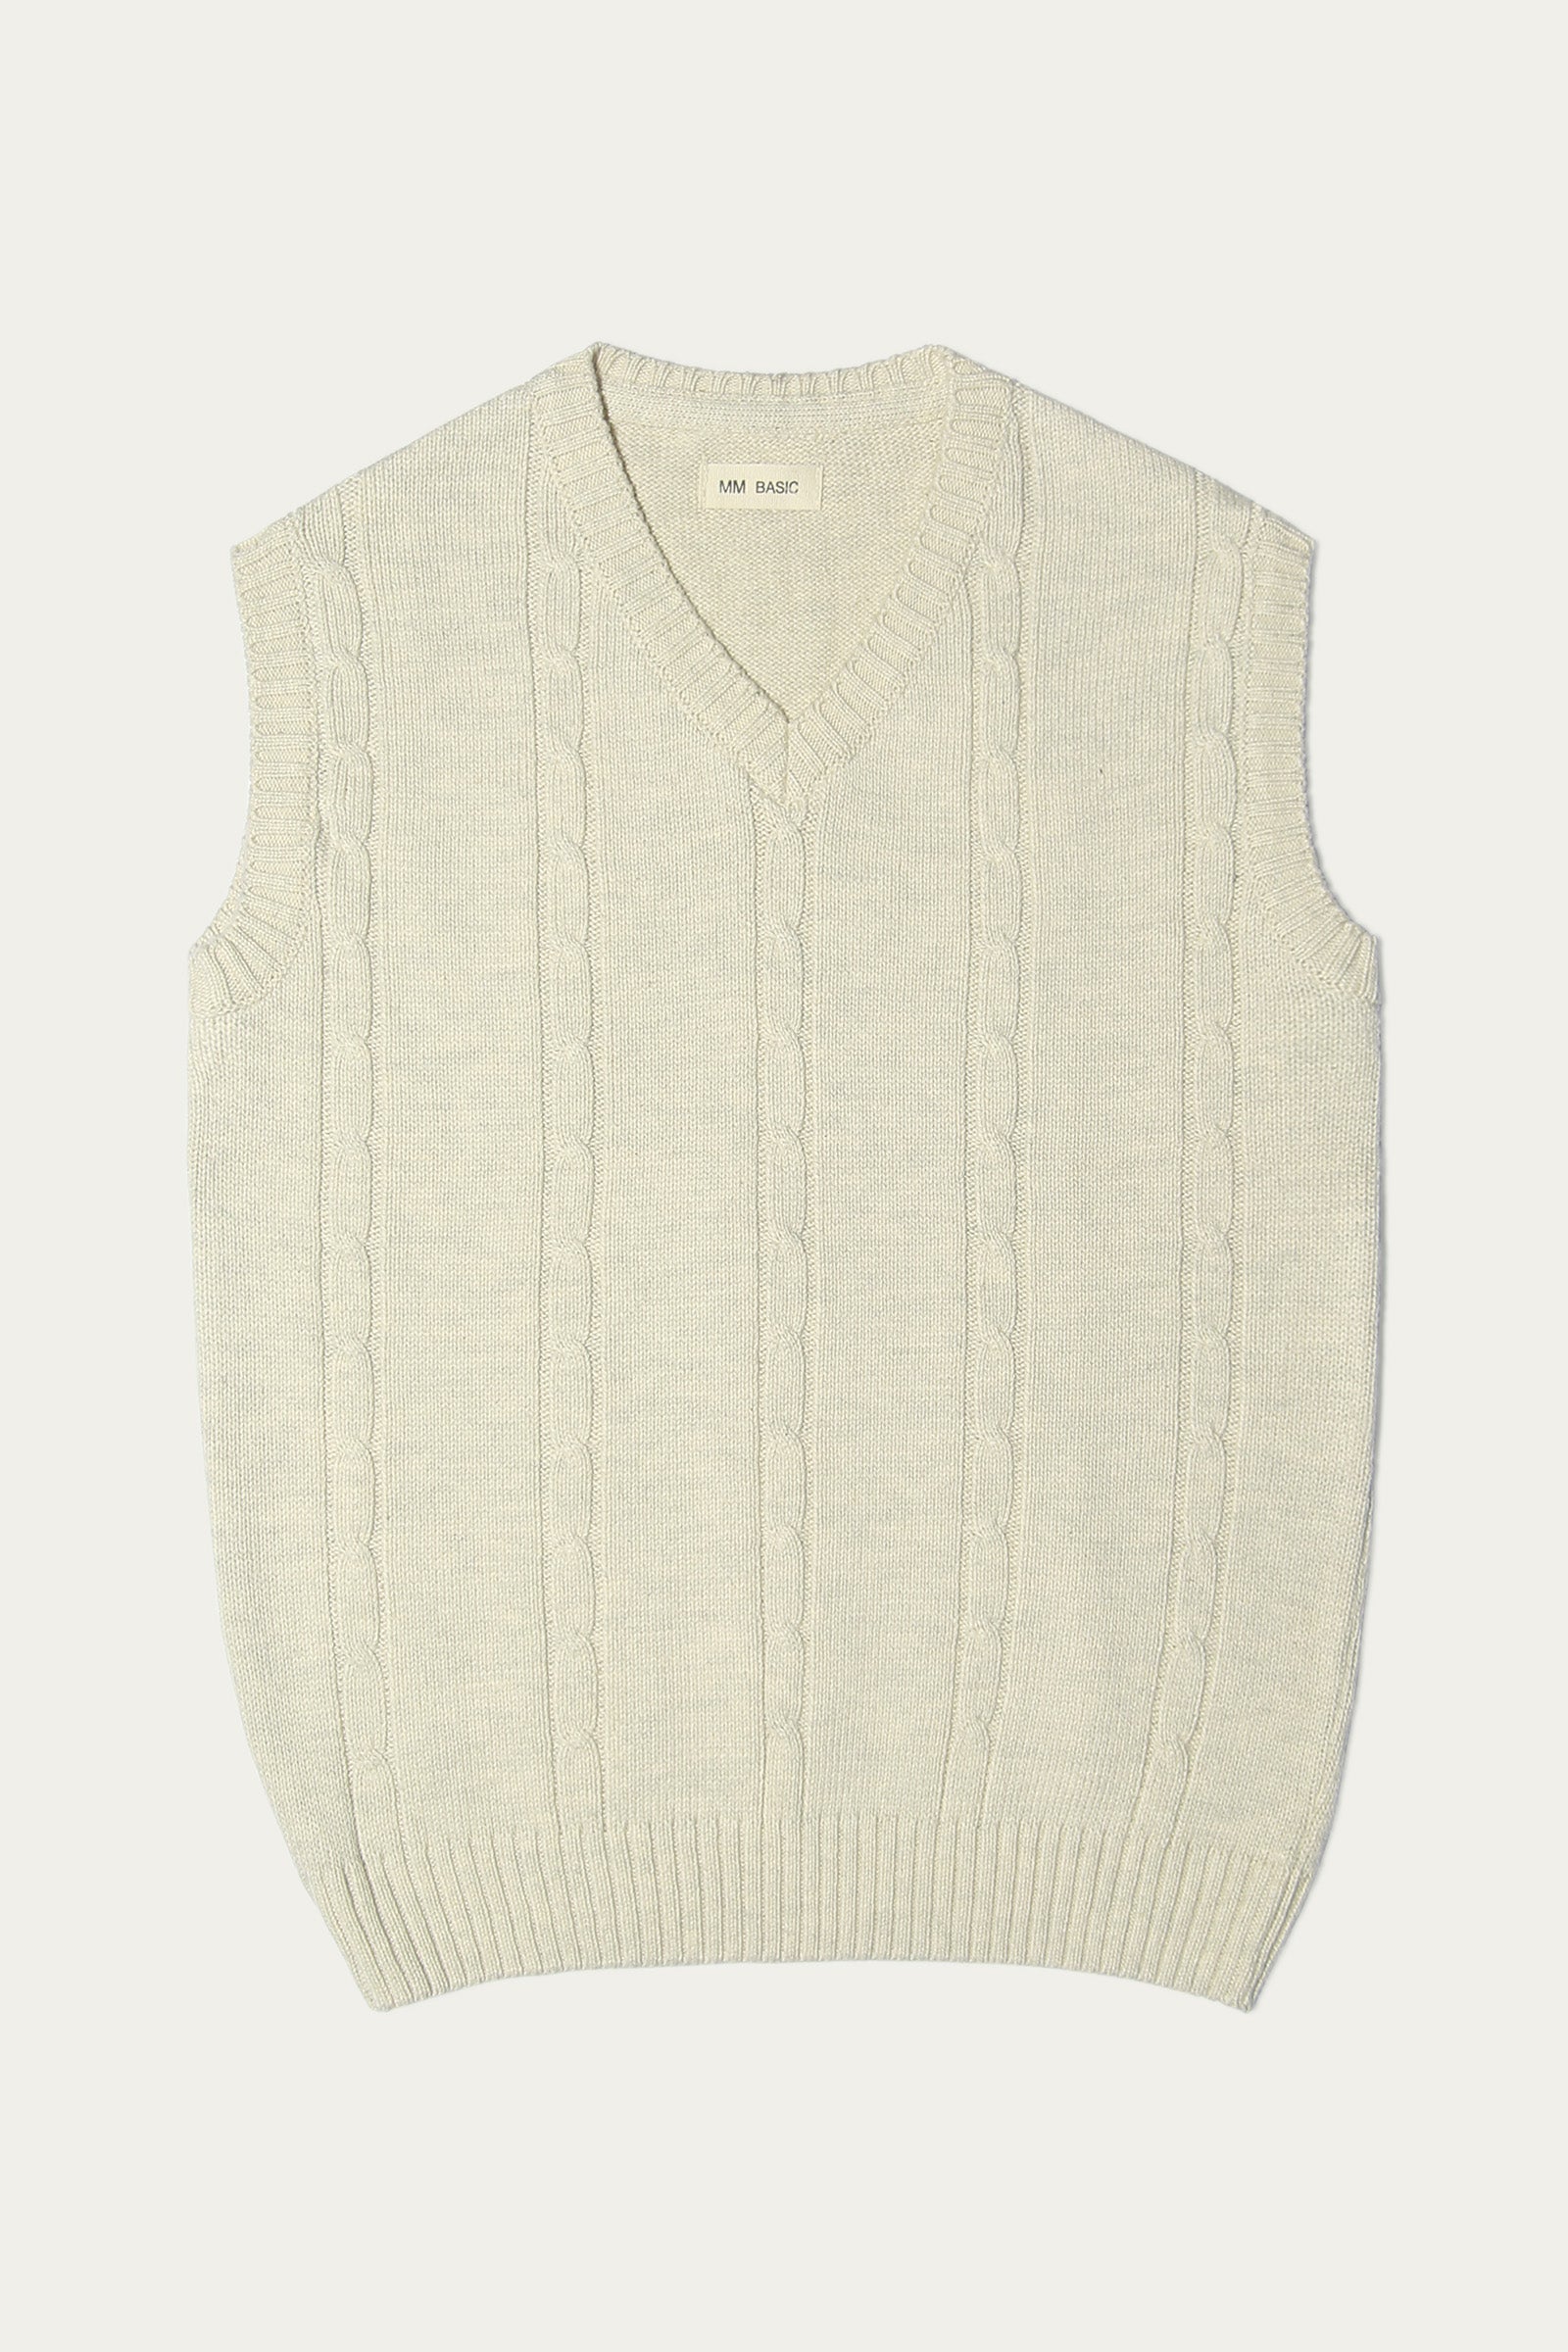 Sleeveless sweater (MSBASIC-SL-02)